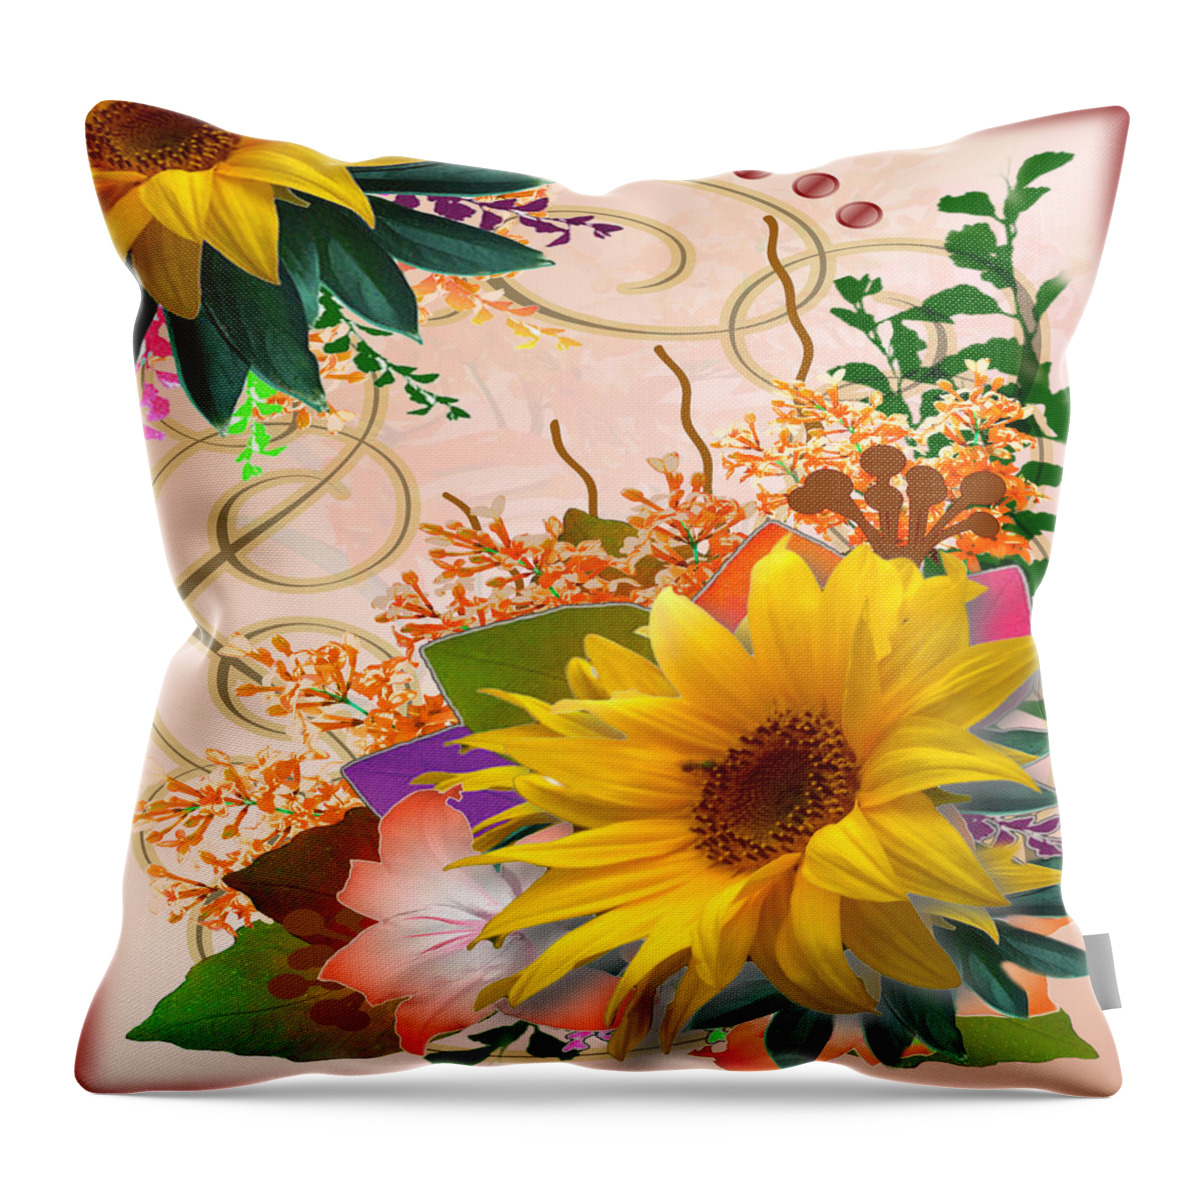 Autumn Throw Pillow featuring the digital art Floral Autumn Seasonal Card of November Colors by Delynn Addams